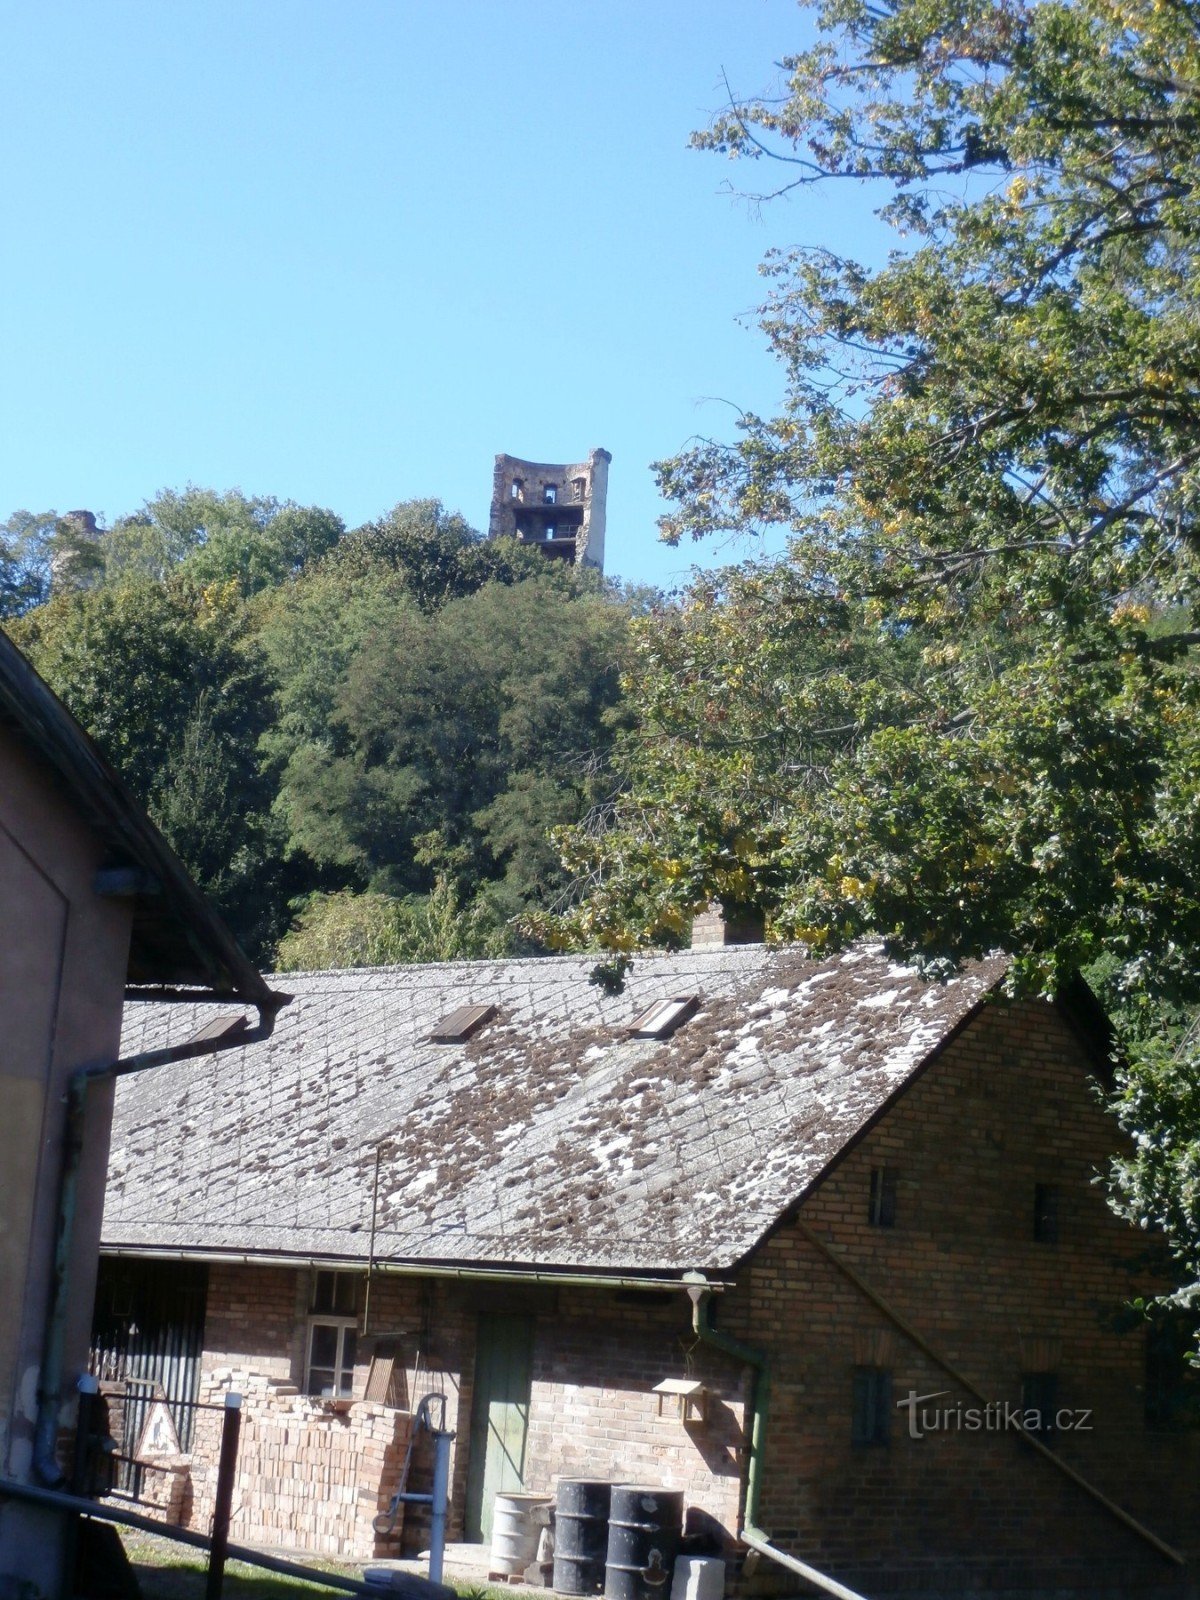 På vägen kikar tornet på slottet Zvířetice ut på oss